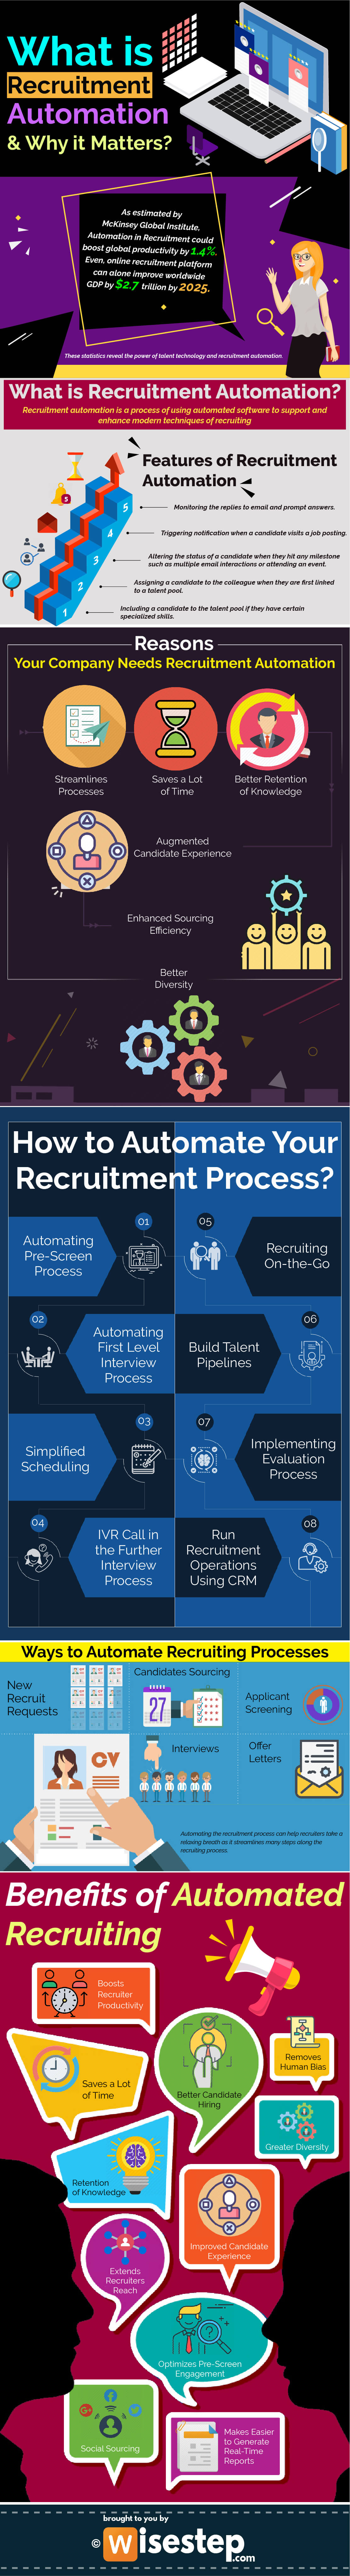 Recruitment automation